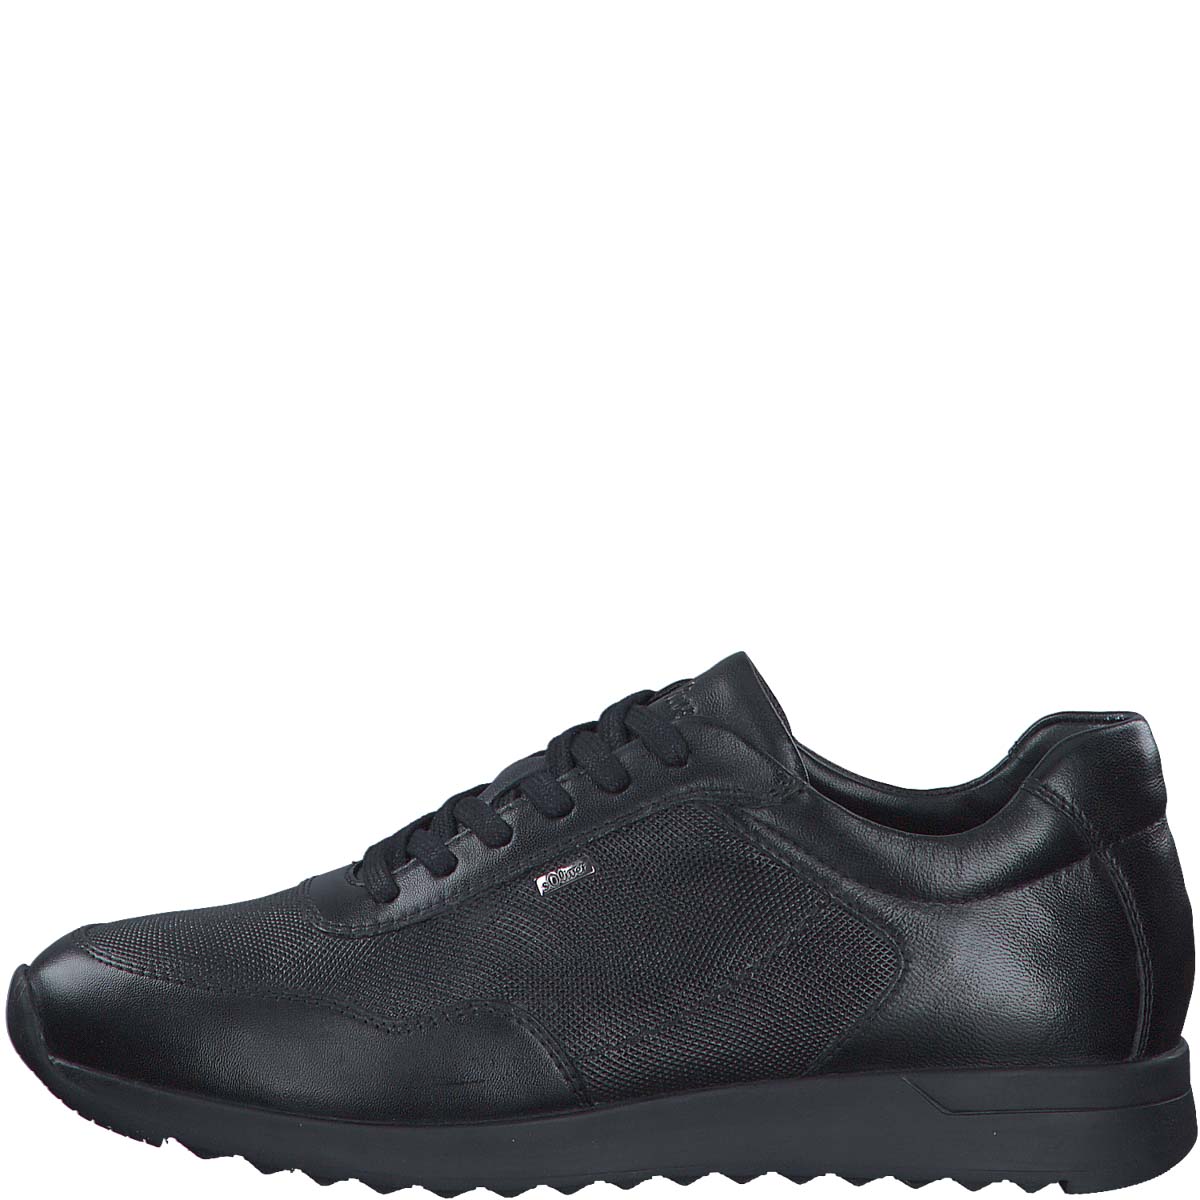 S.Oliver Men's Black Leather Lace-Up Shoes